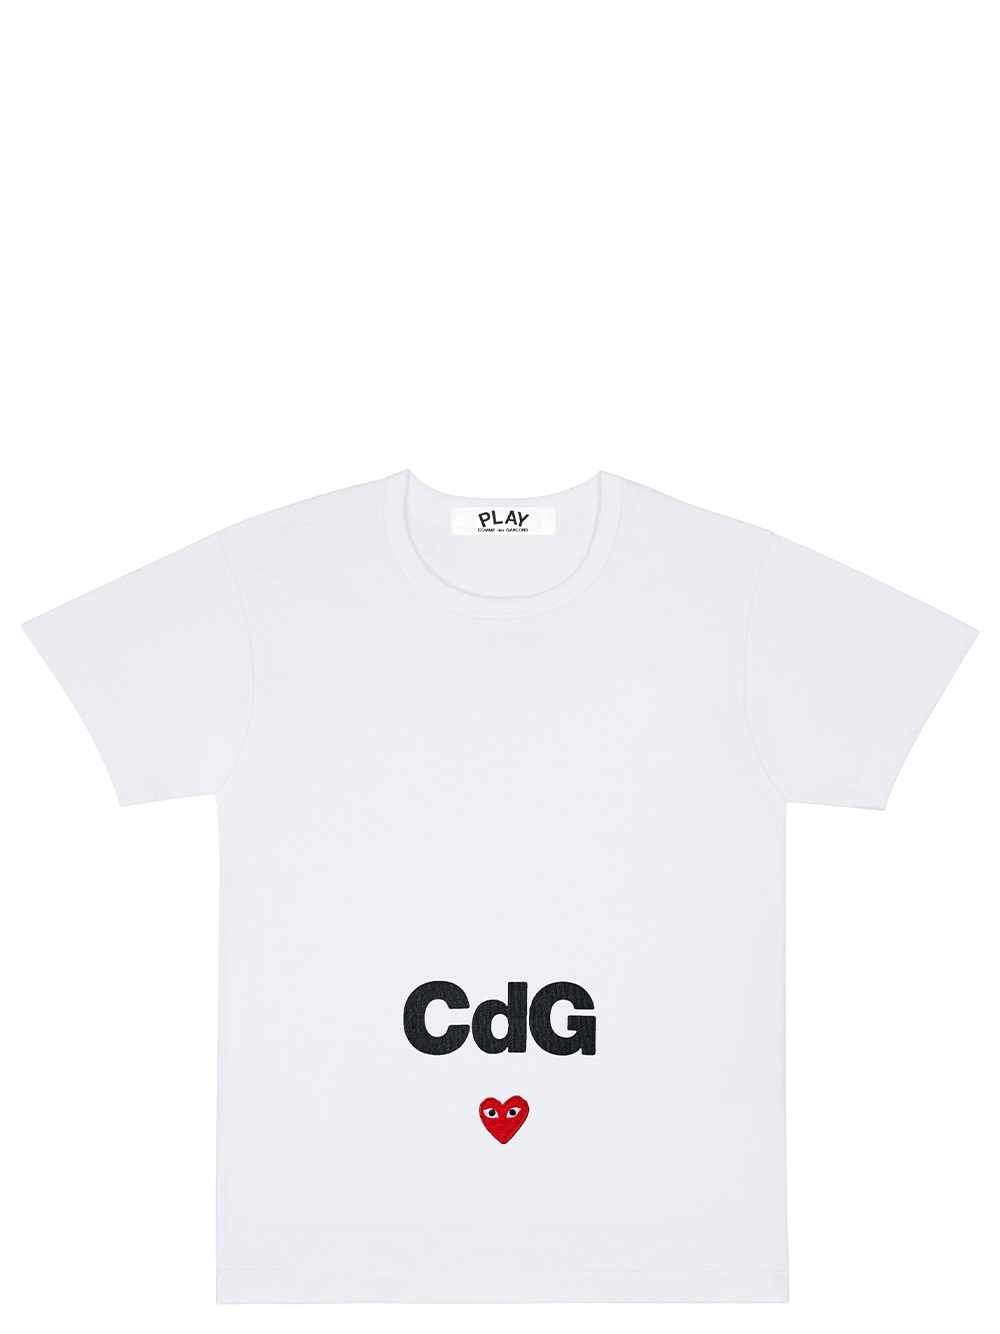 CDG PLAY T-Shirt Women (White)